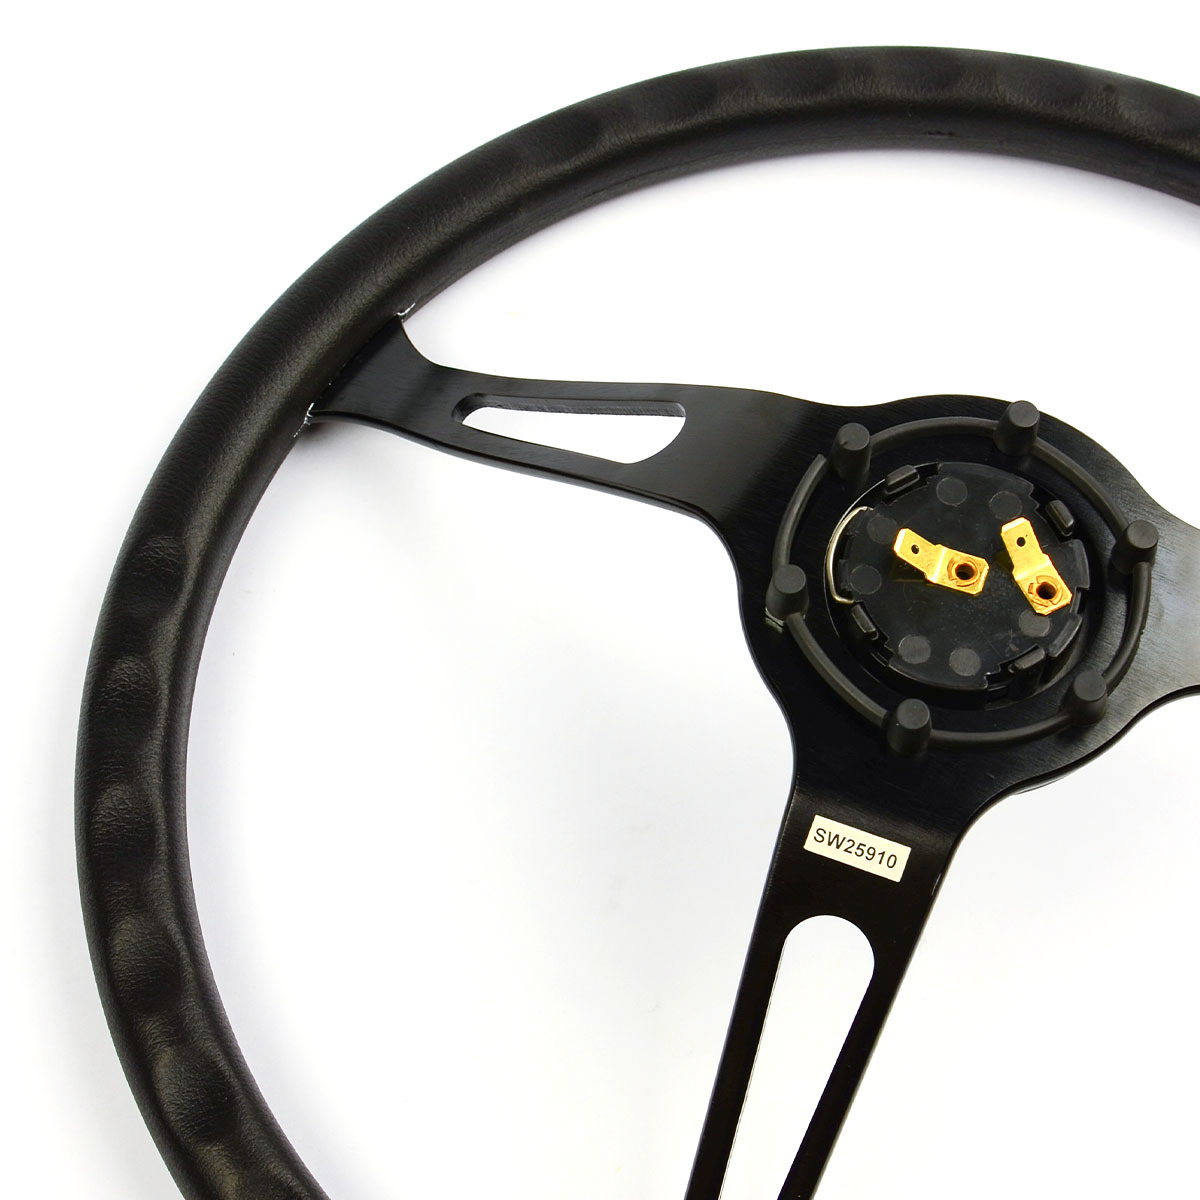 Steering Wheel Poly 15" Classic Deep Dish Black Alloy Slots